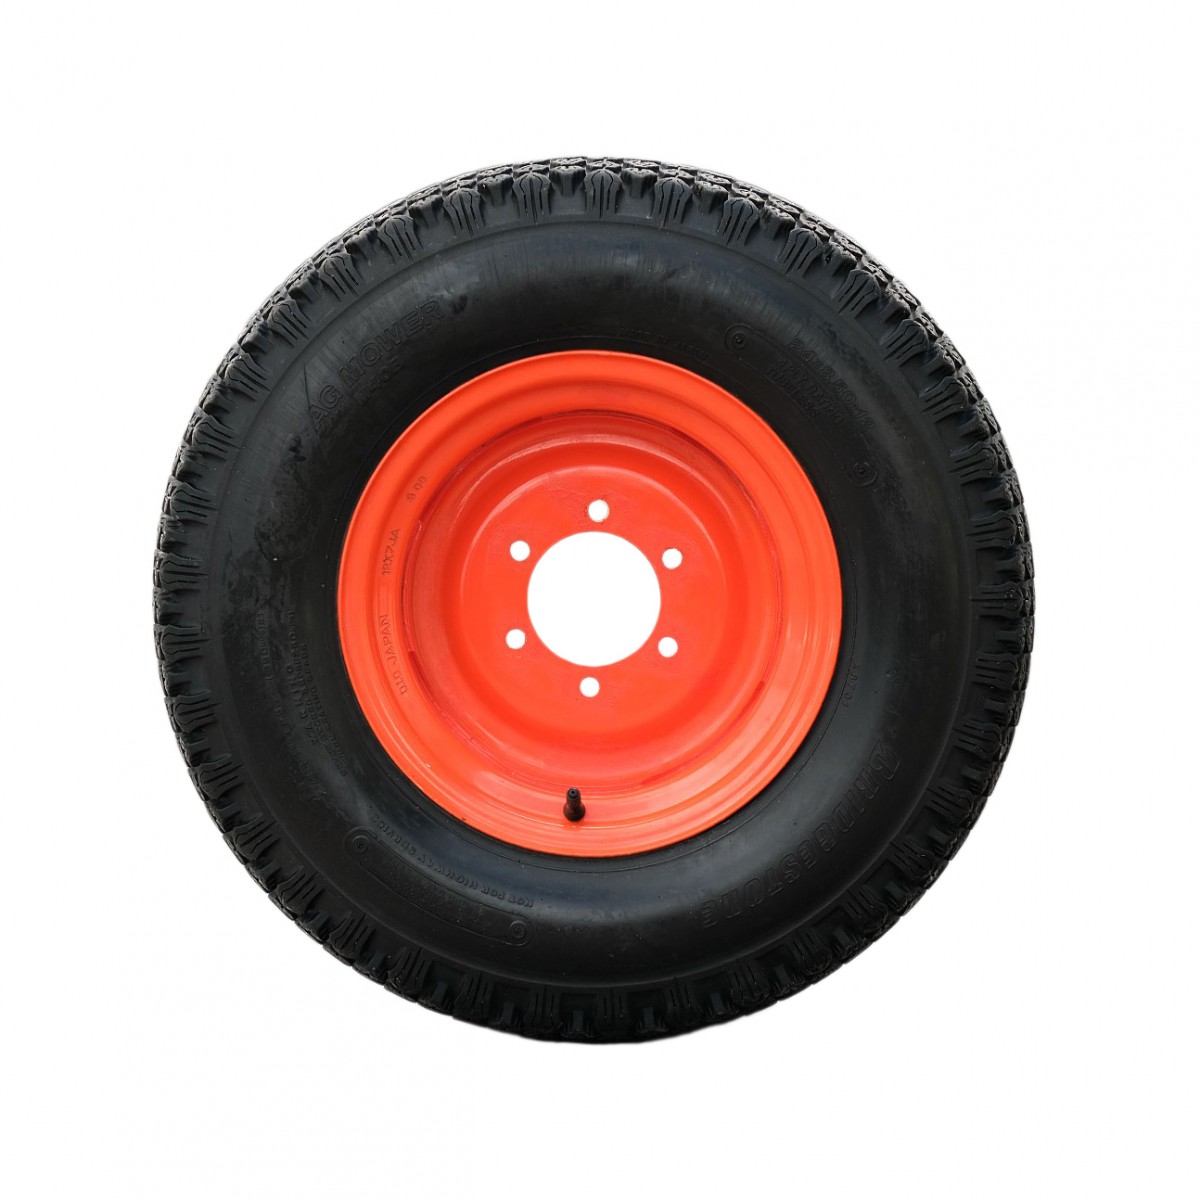 Complete wheel 24x8.50-12 / grass tire